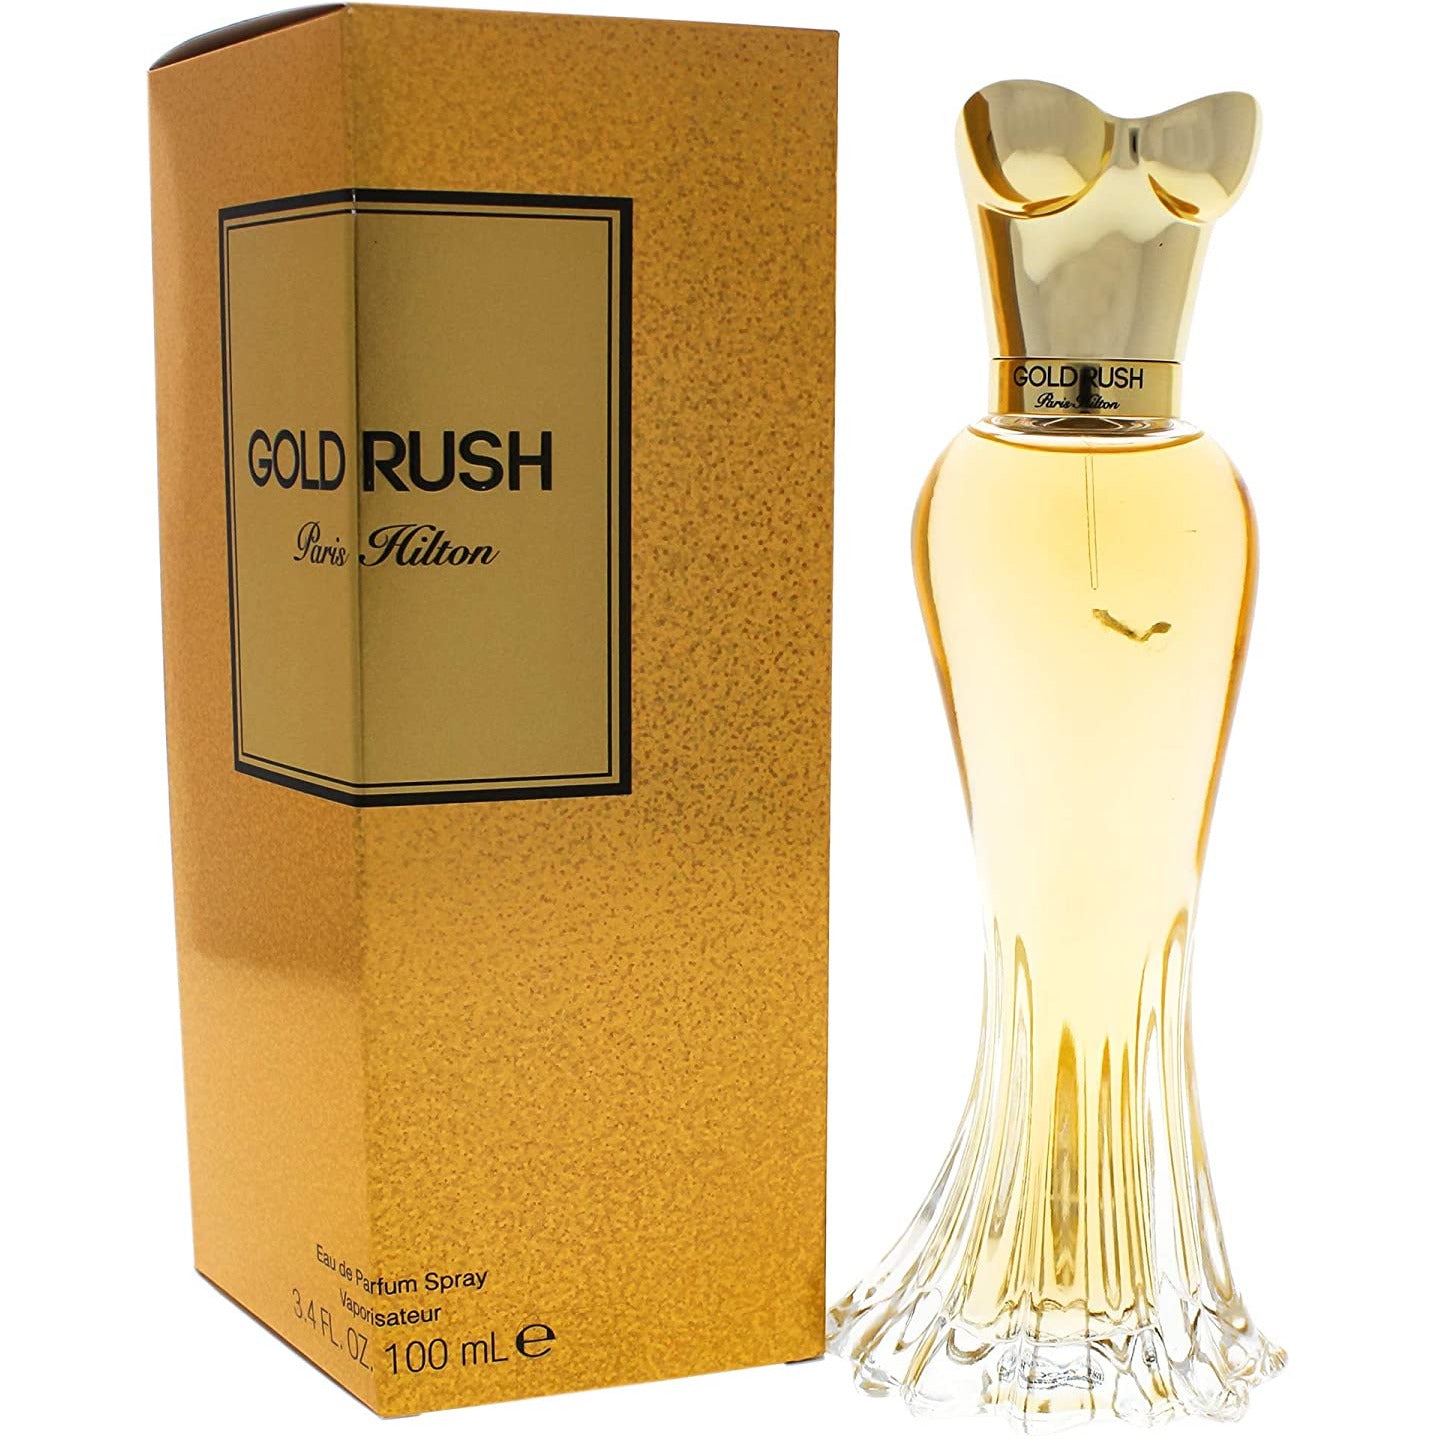 perfume gold rush de paris hilton mujer precio